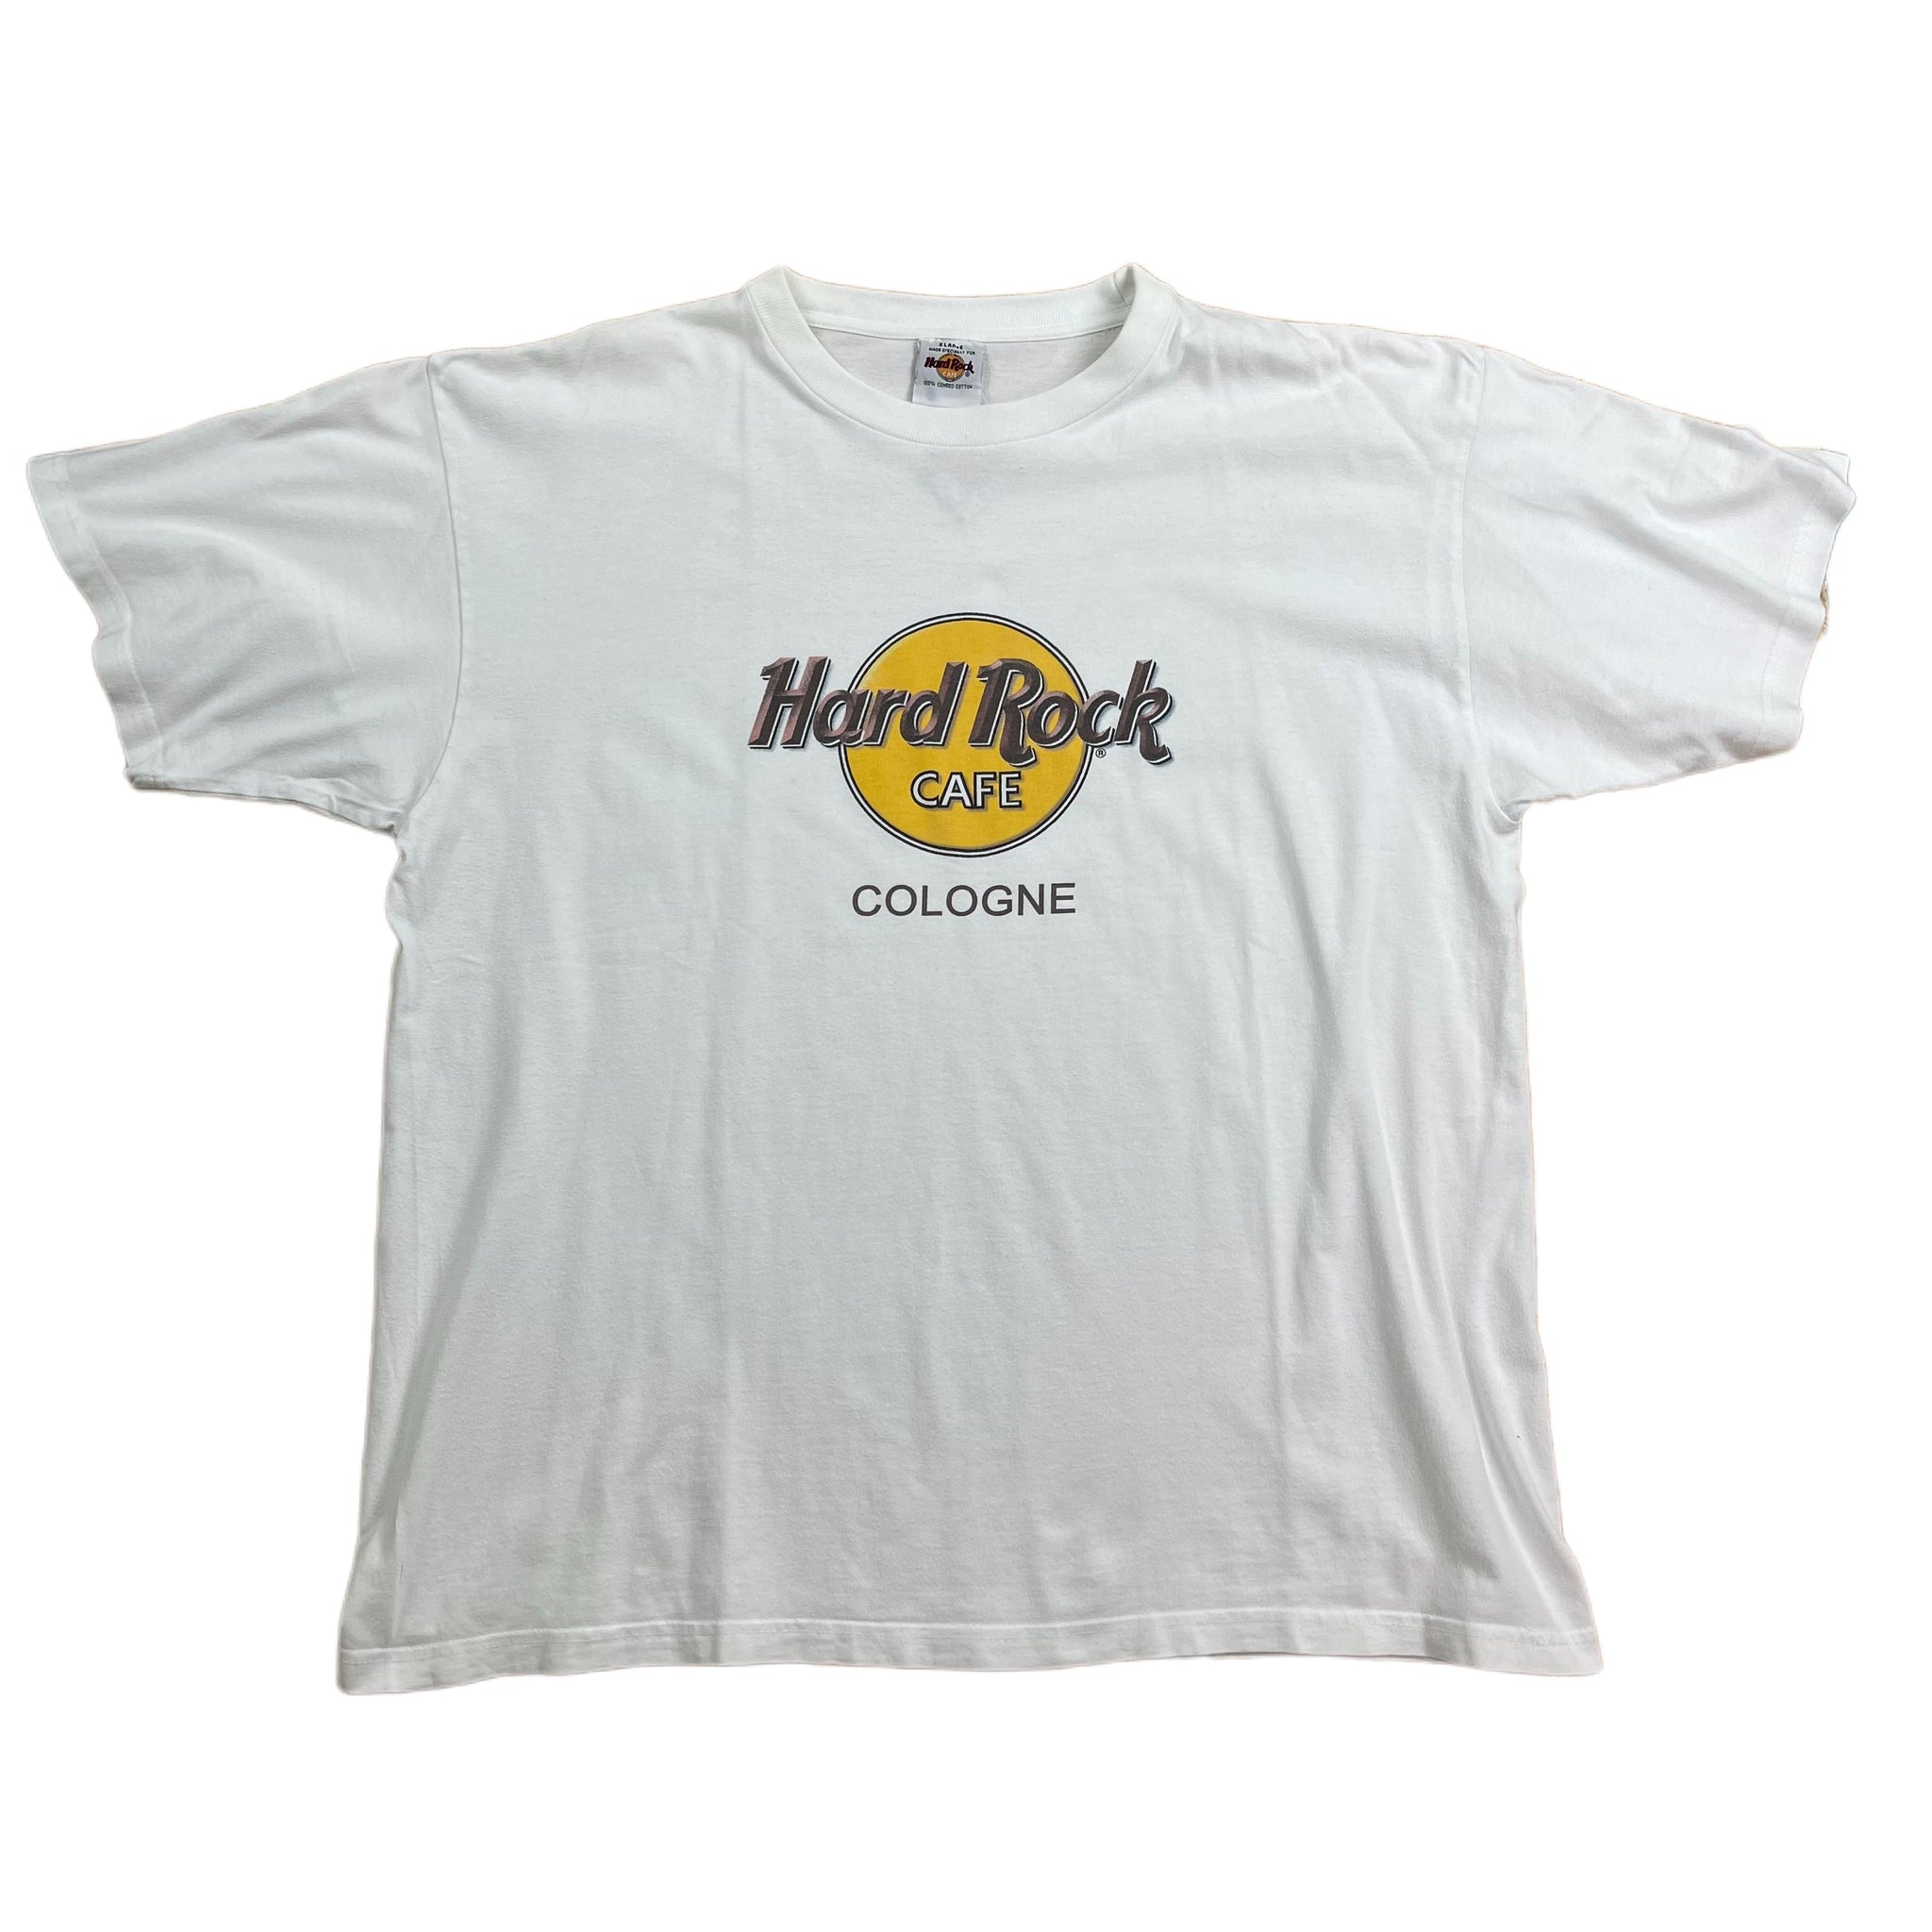 Vintage White Cologne Hard Rock Cafe T-Shirt - XL